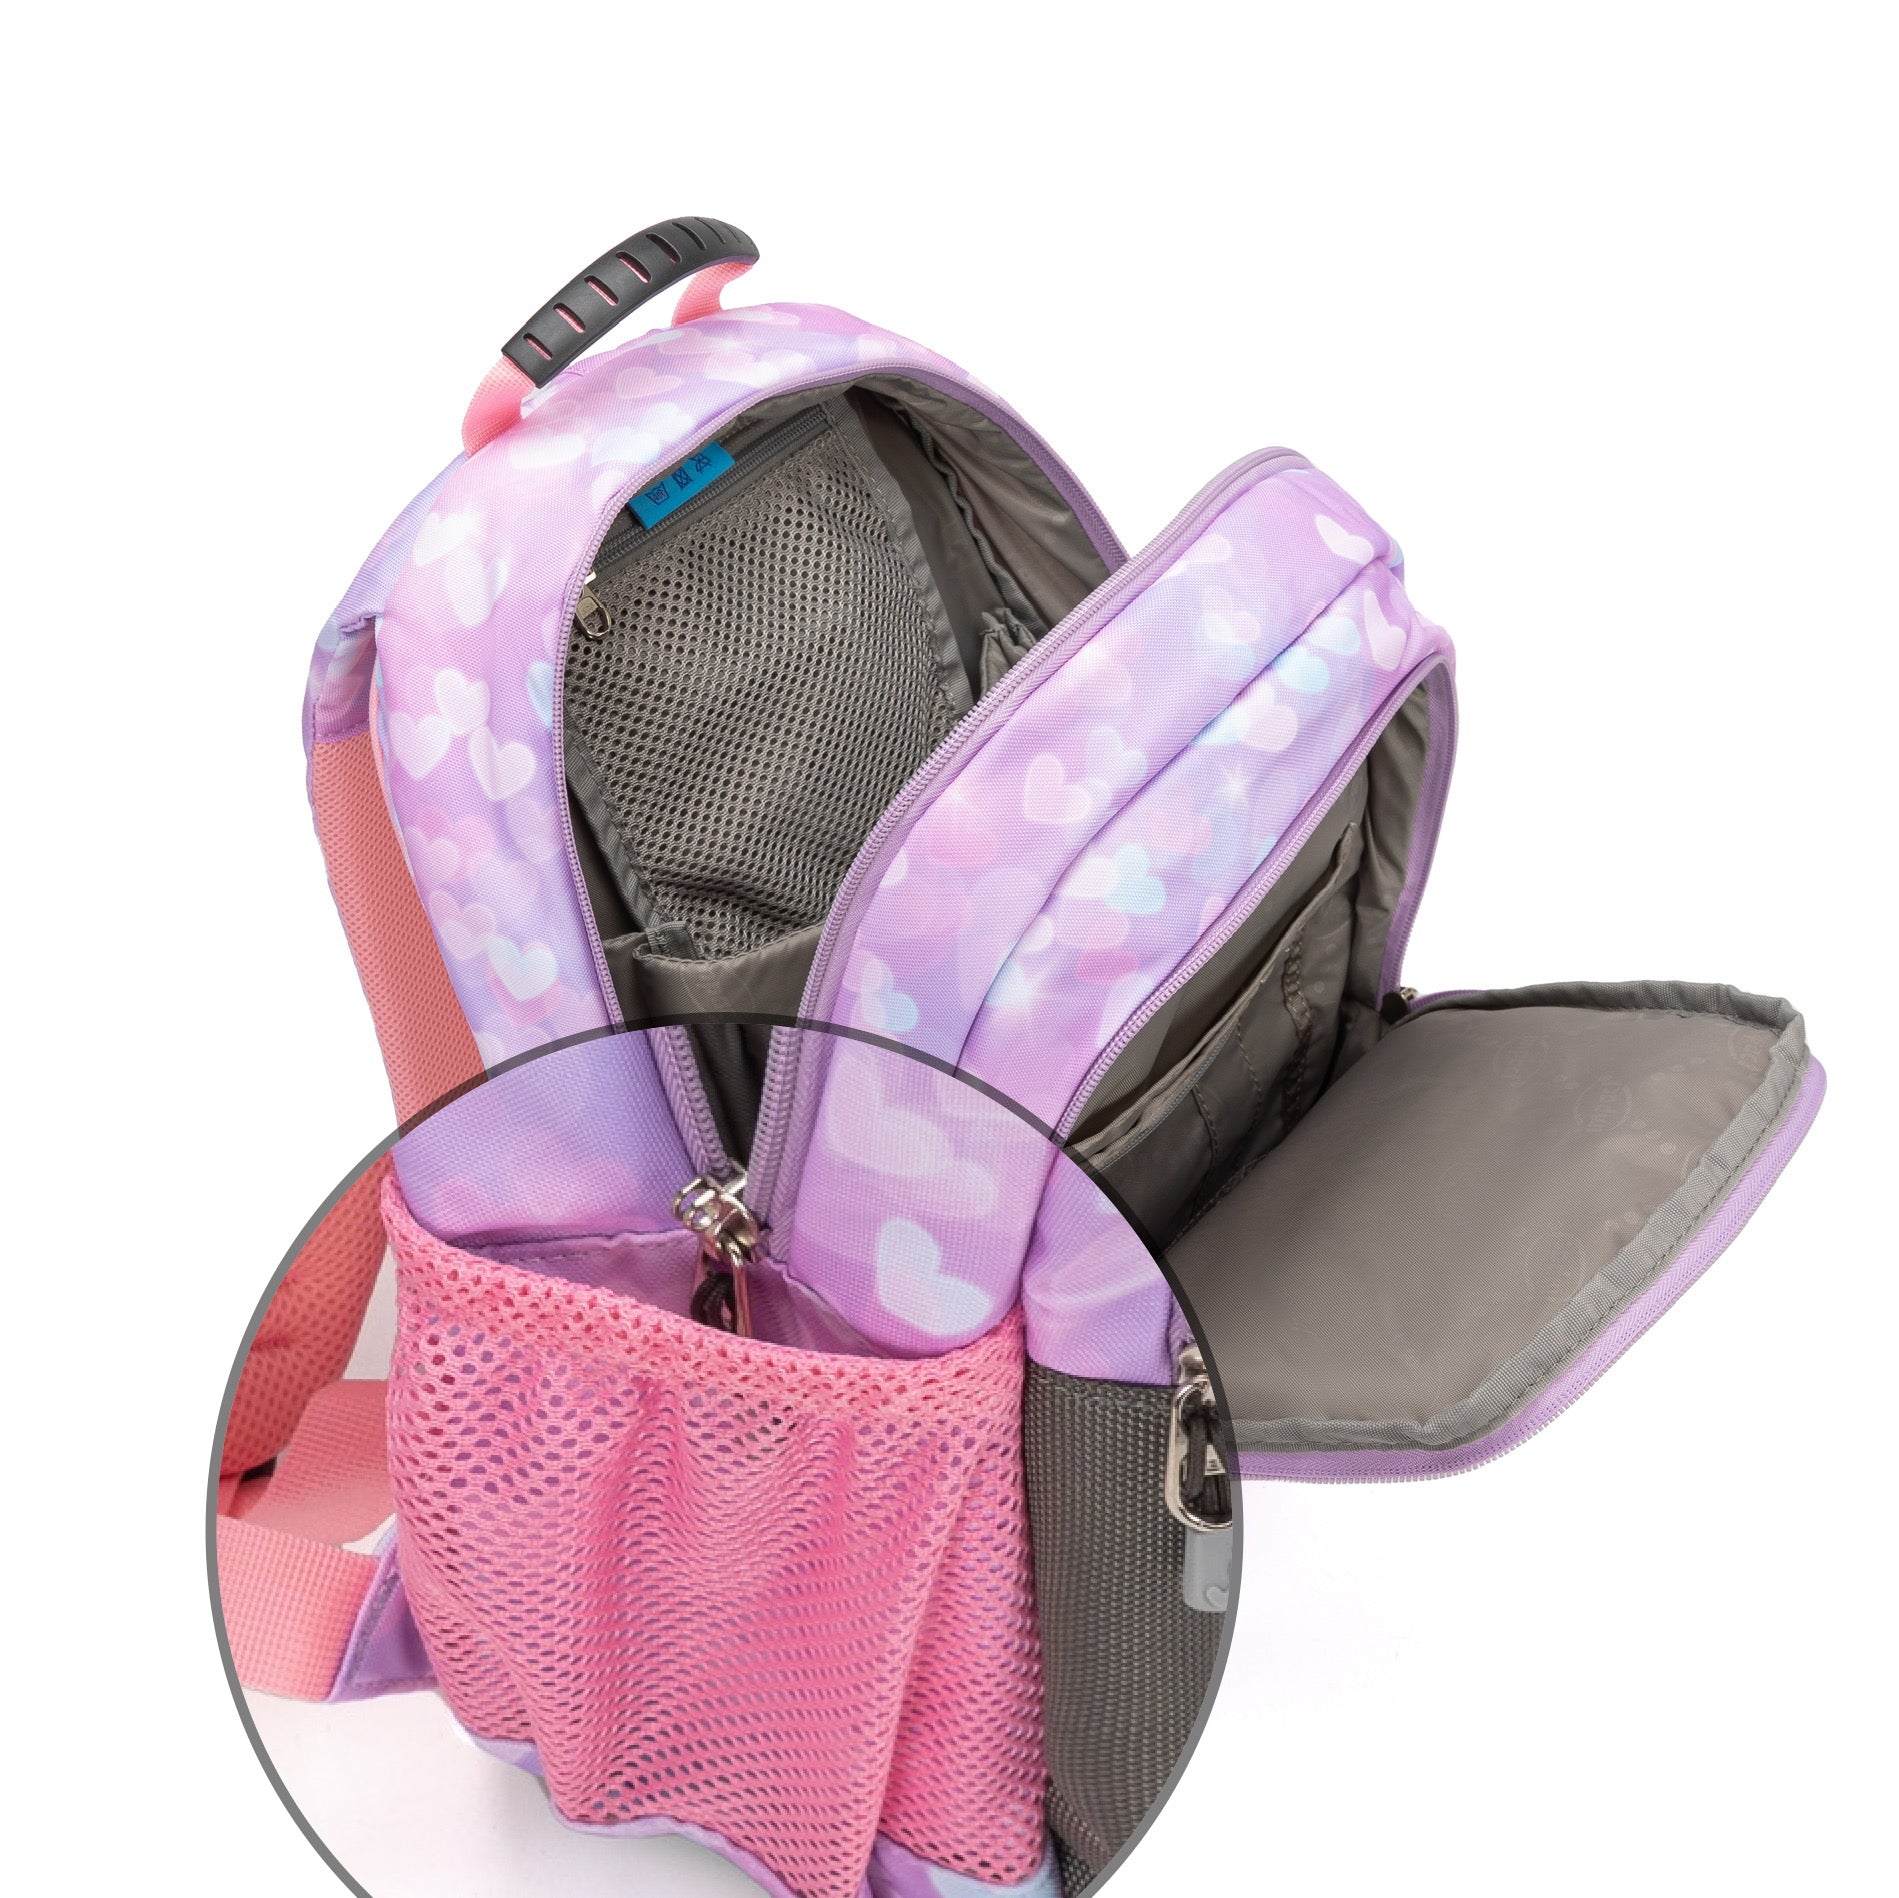 Impact School Bag IPEG-158 - Ergo-Comfort Spinal Support Primary Secondary School Backpack (Popular Colors)